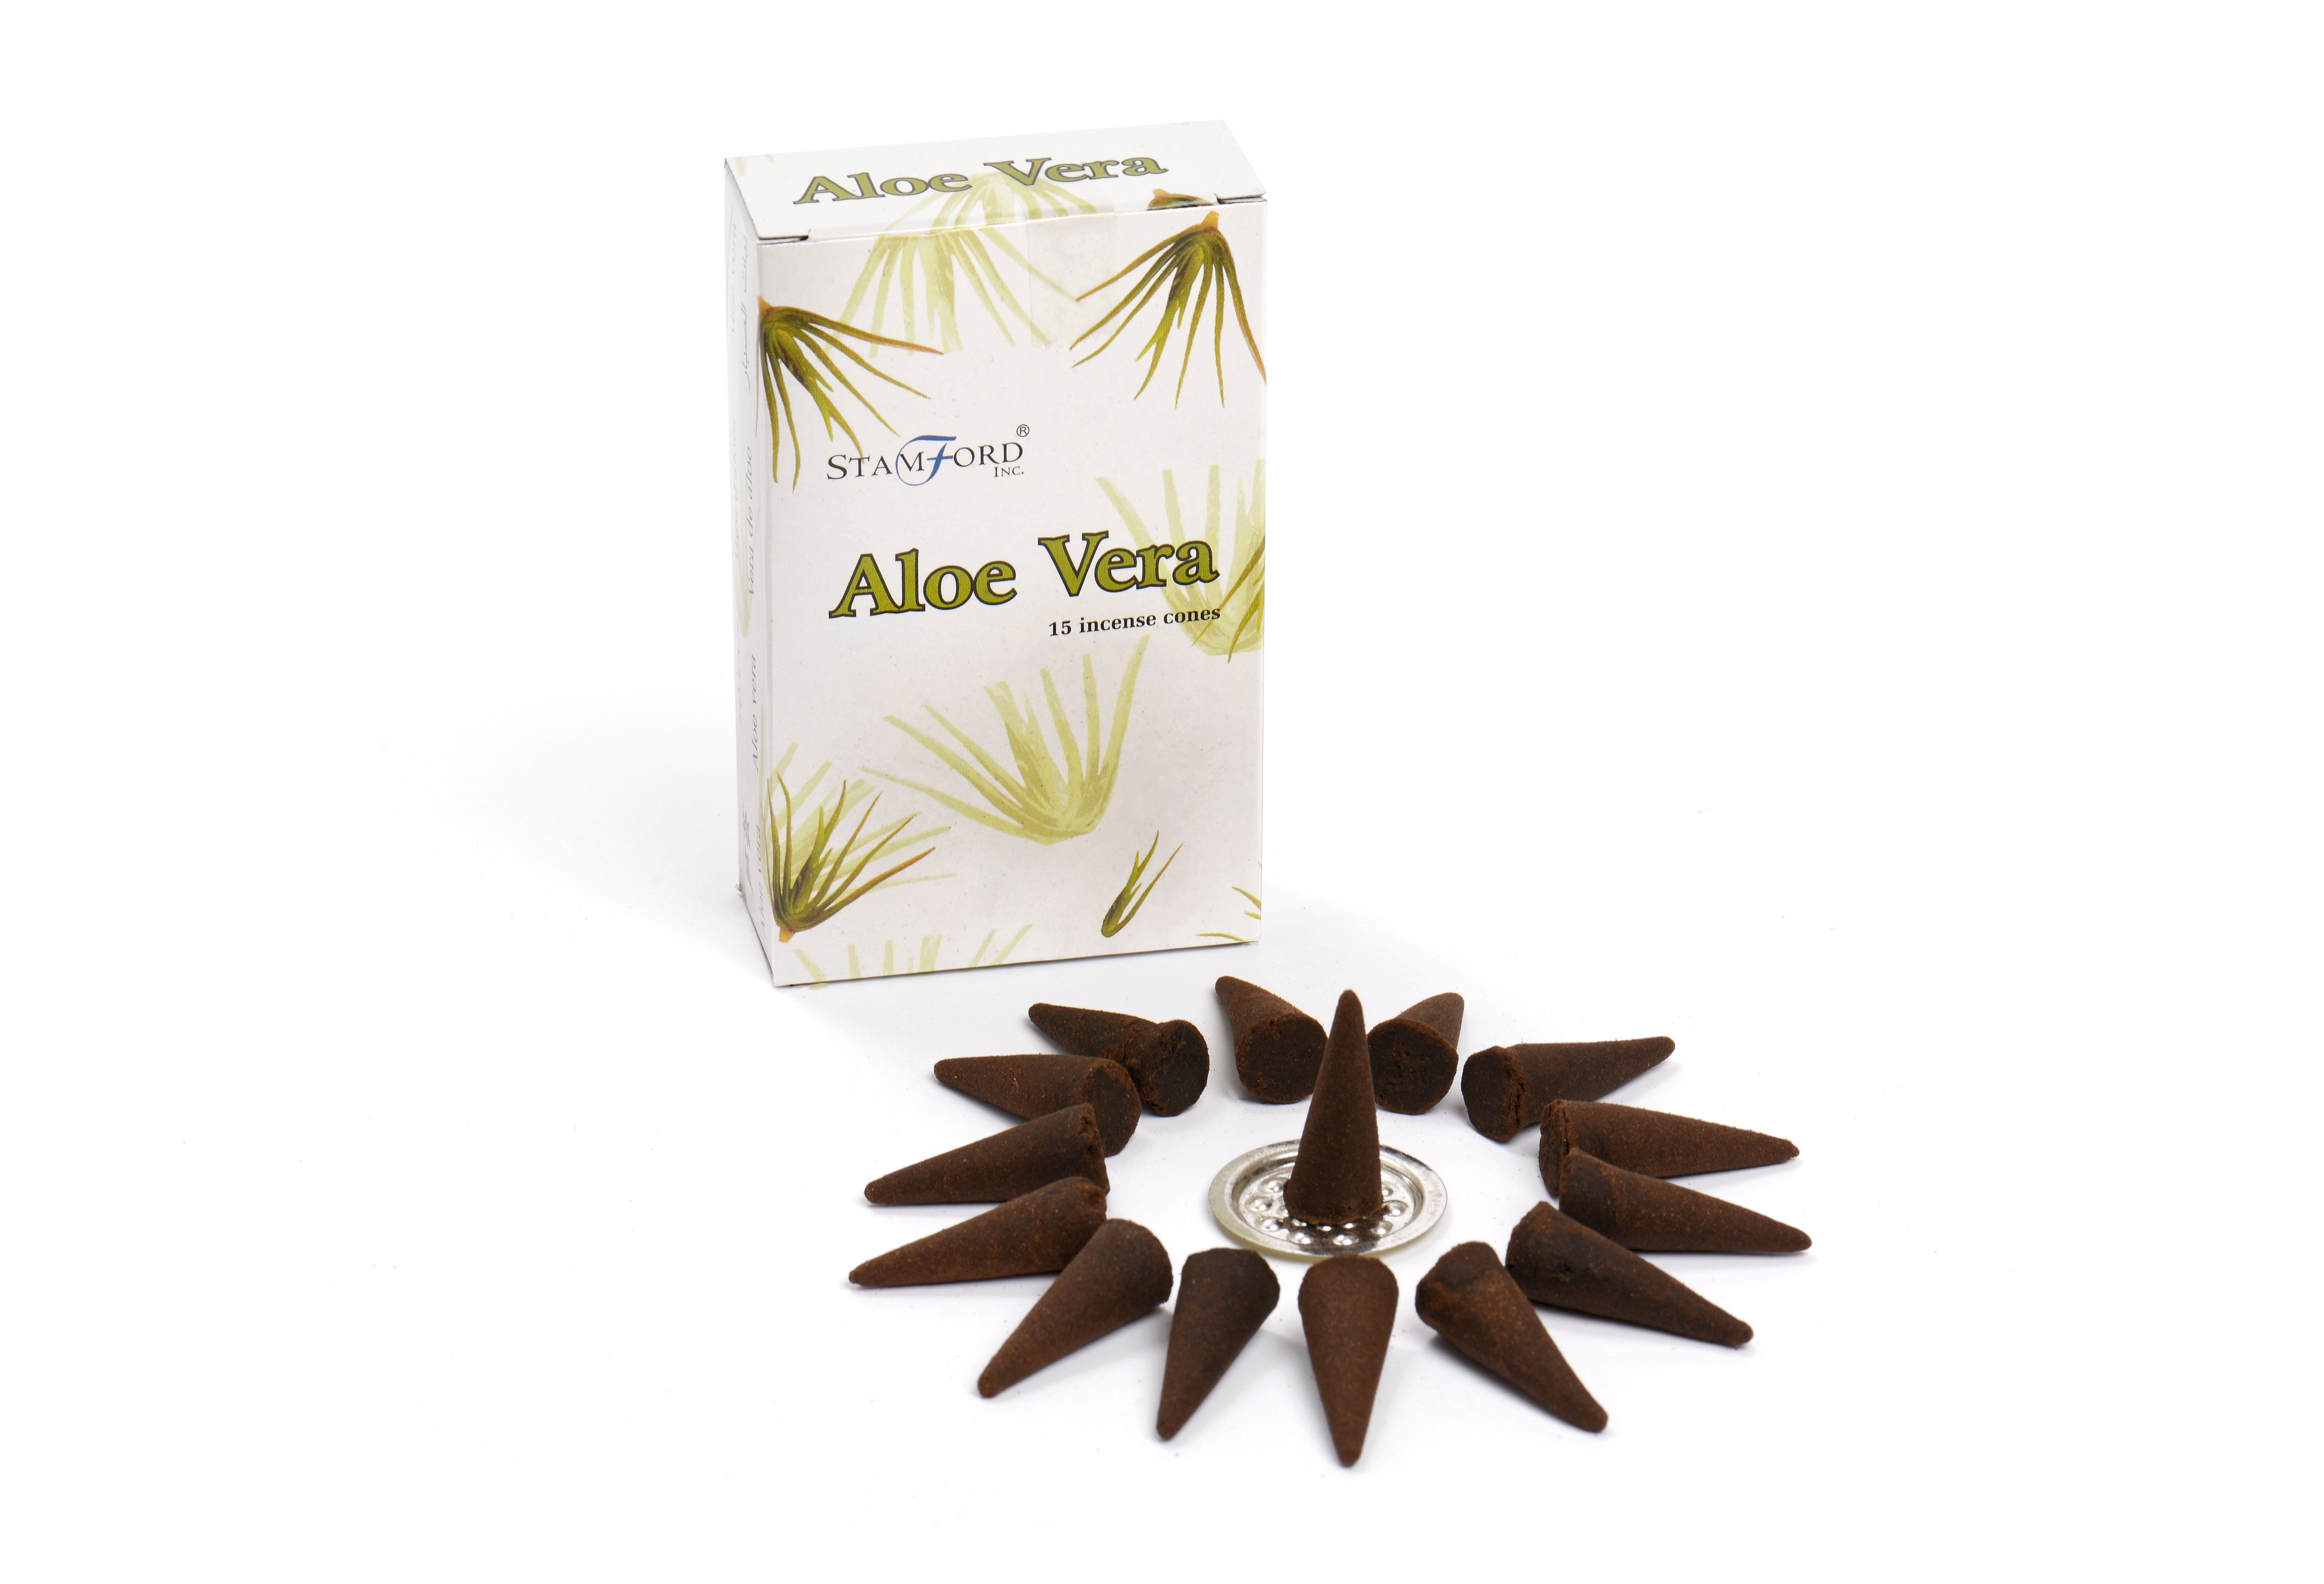 Aloe Vera Stamford Incense Cones and Metal Holder